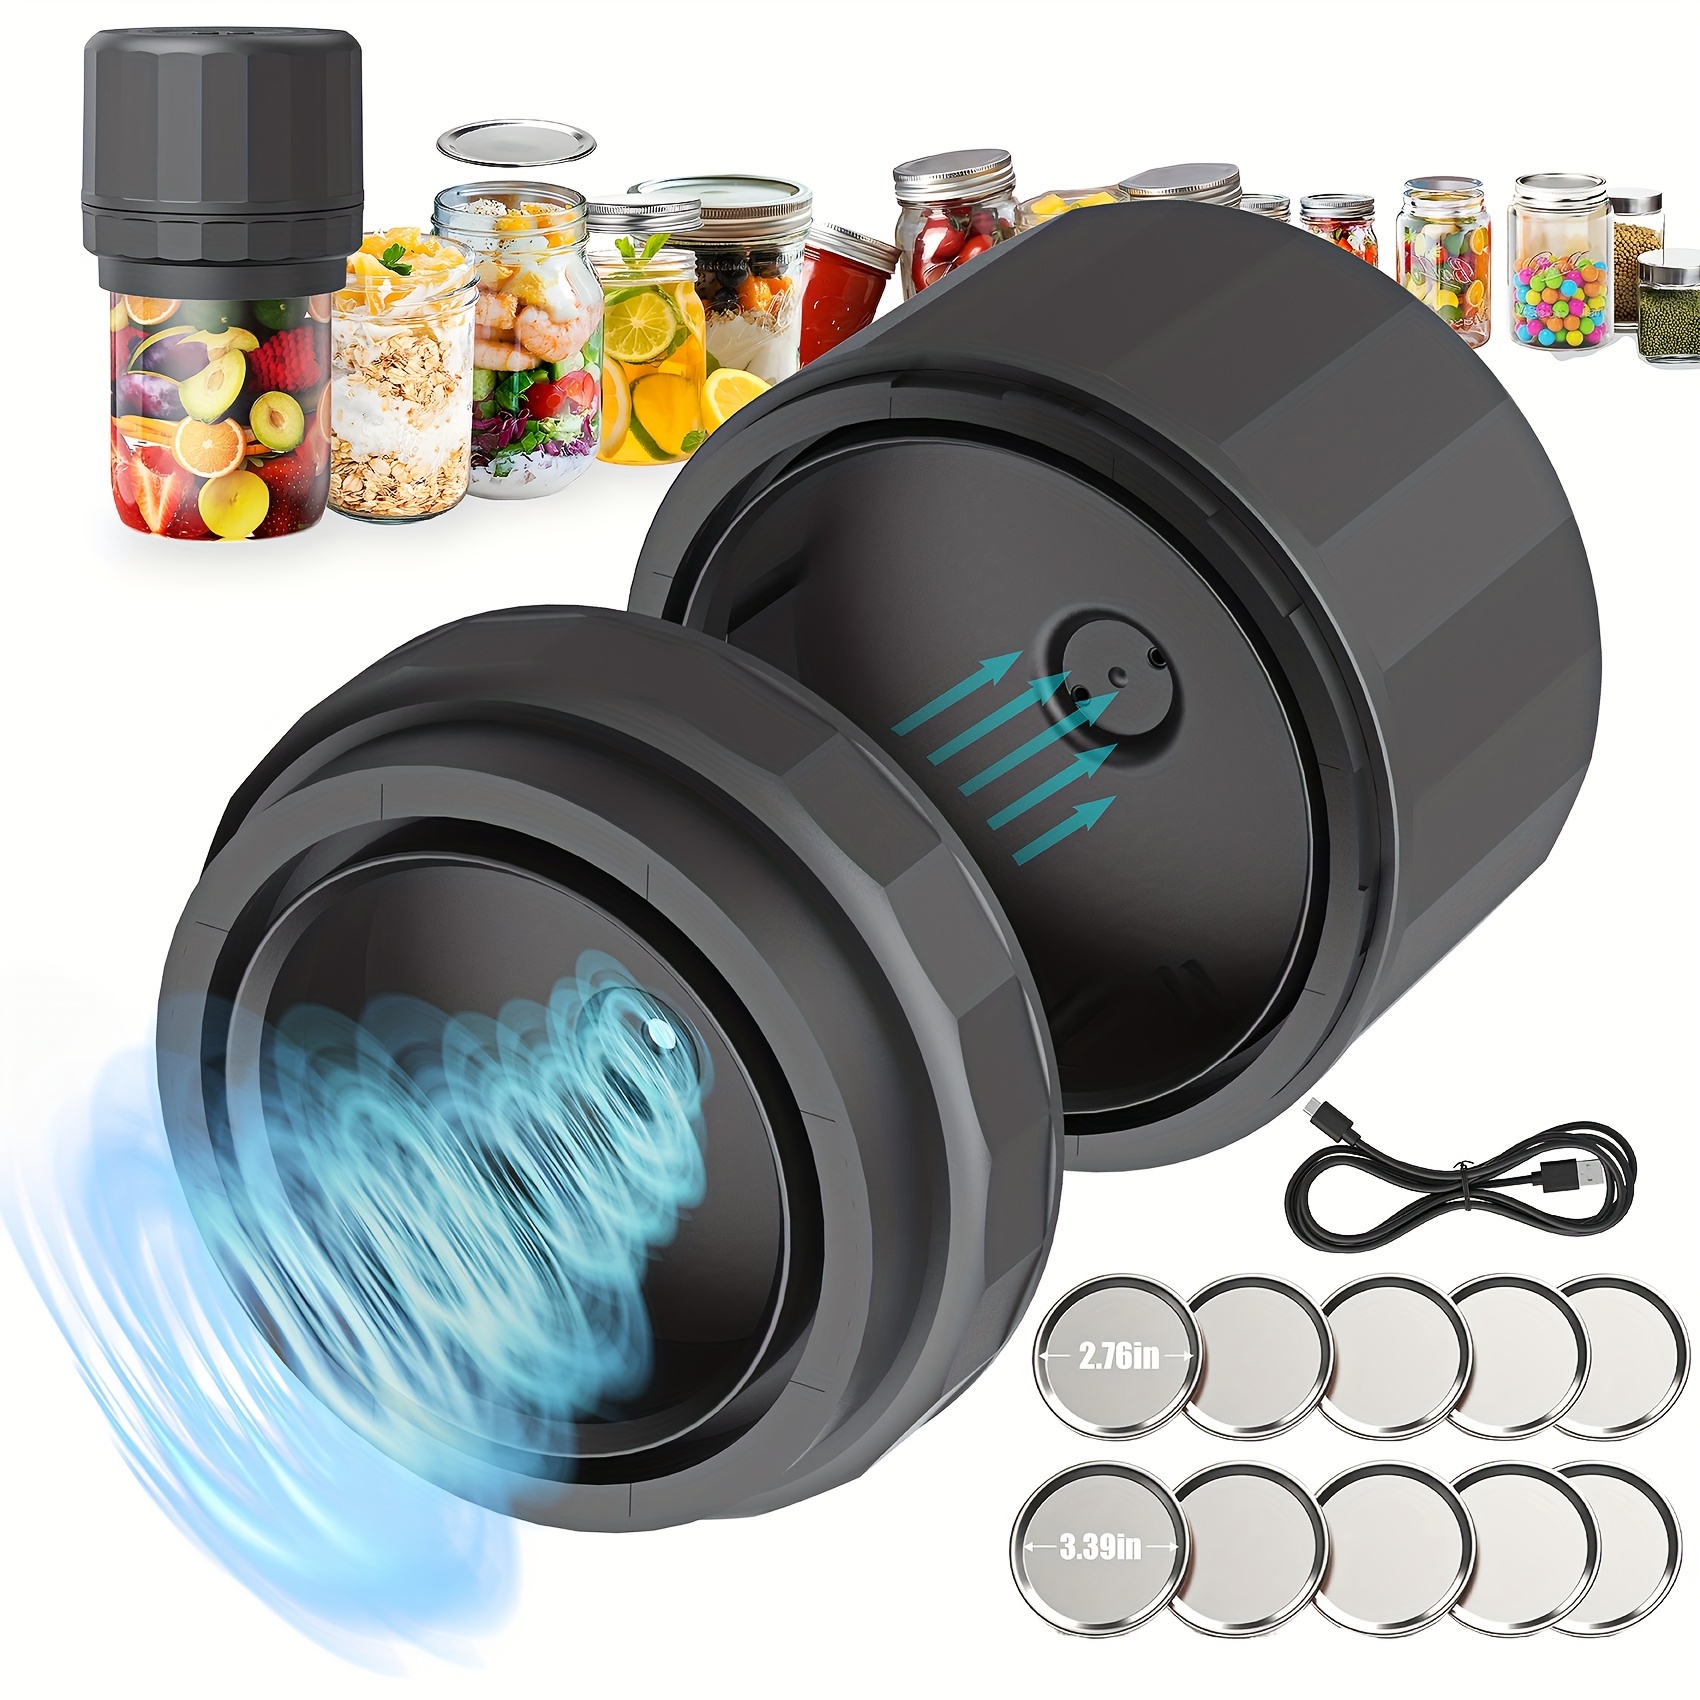 food saver lids for mason jars, Vacuum seal cap Compatible with FoodSaver  Vacuum Sealer, Food Storage/fermentation lids,6-pack regular mouth mason  jar